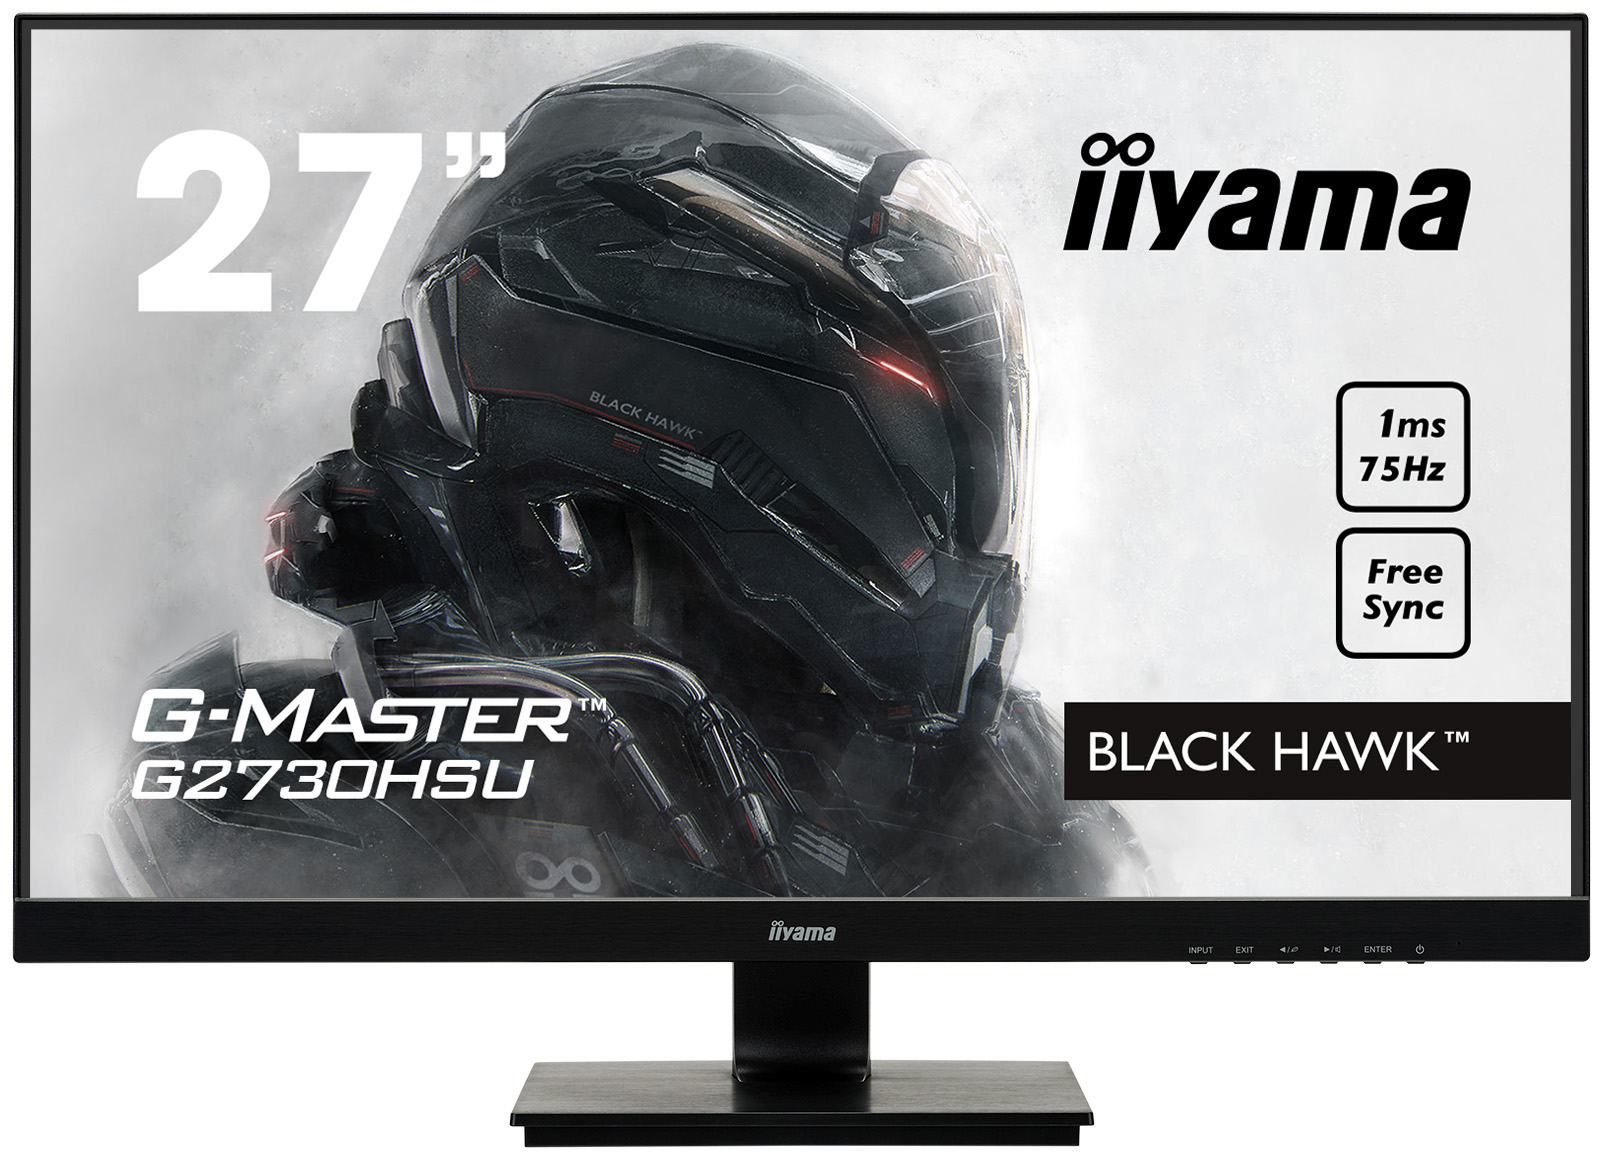 IIYAMA G-MASTER G2730HSU-B1 Monitor Full-HD 75 Gaming 27 Zoll (1 Hz) ms Reaktionszeit